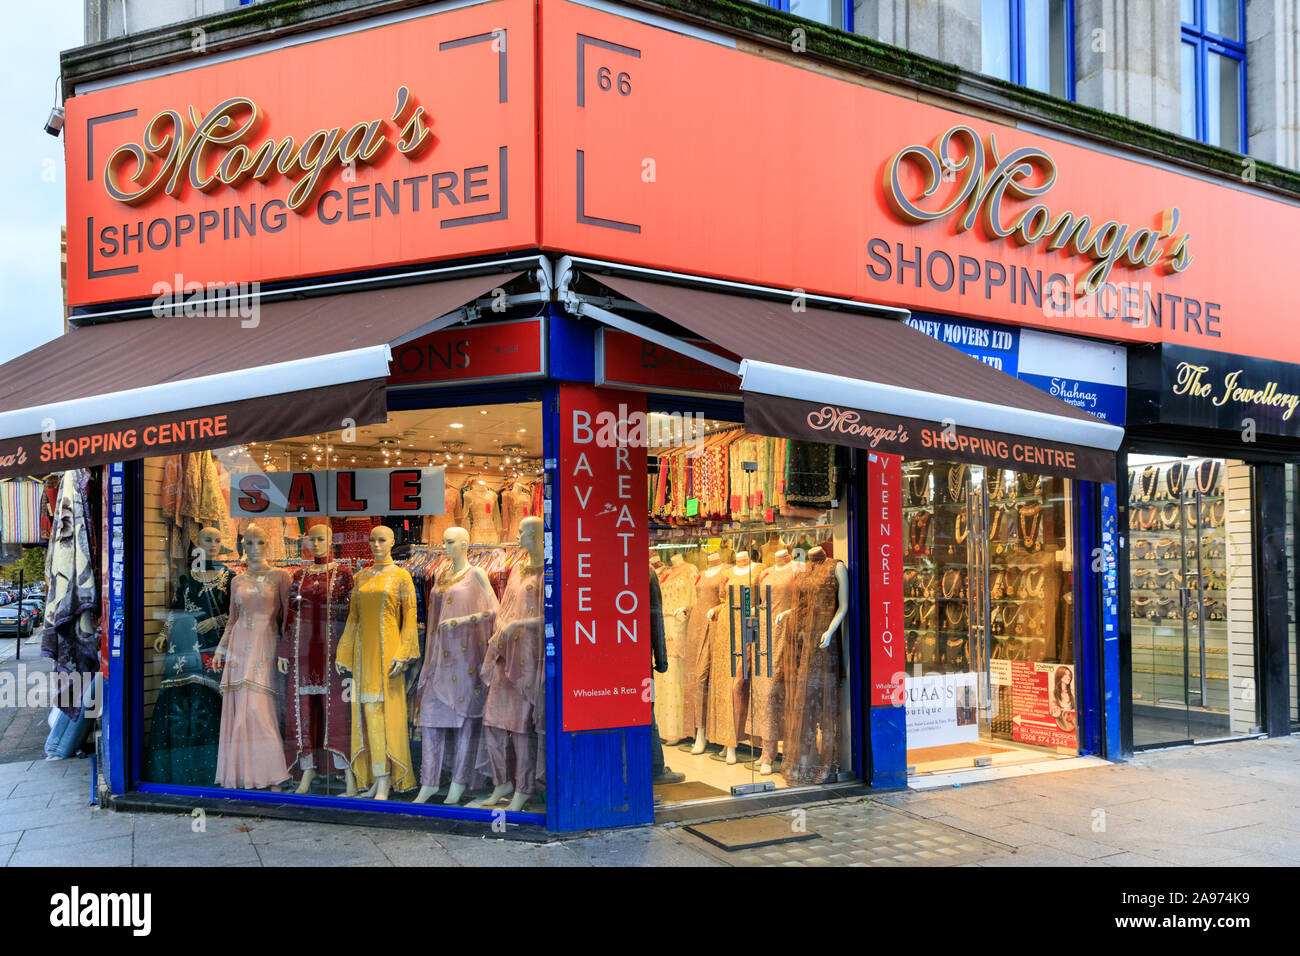 Manga's Shopping Centre, Southall High Street, Asian Indian and Punjabi clothes  shops, saris and bridal fashion, exterior, London, UK Stock Photo - Alamy